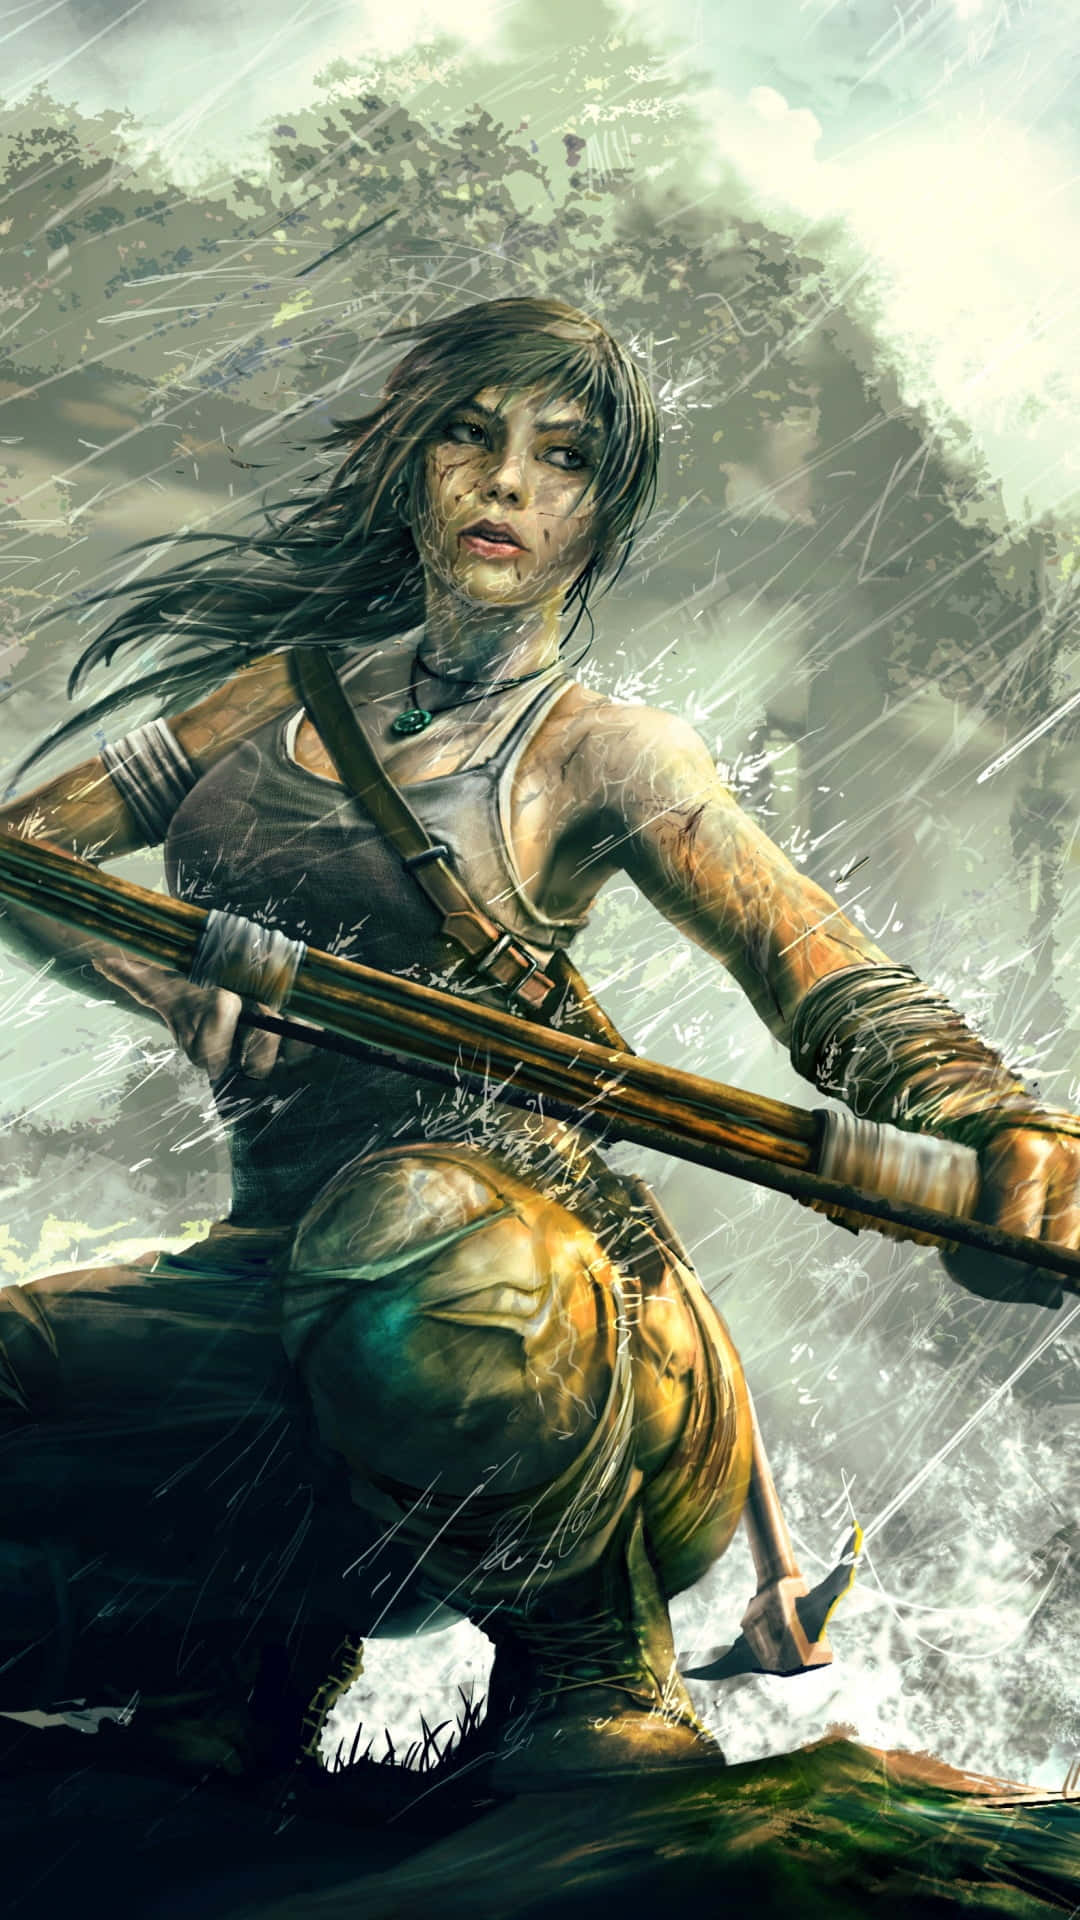 Androidrise Of The Tomb Raider Bakgrund Regnig.